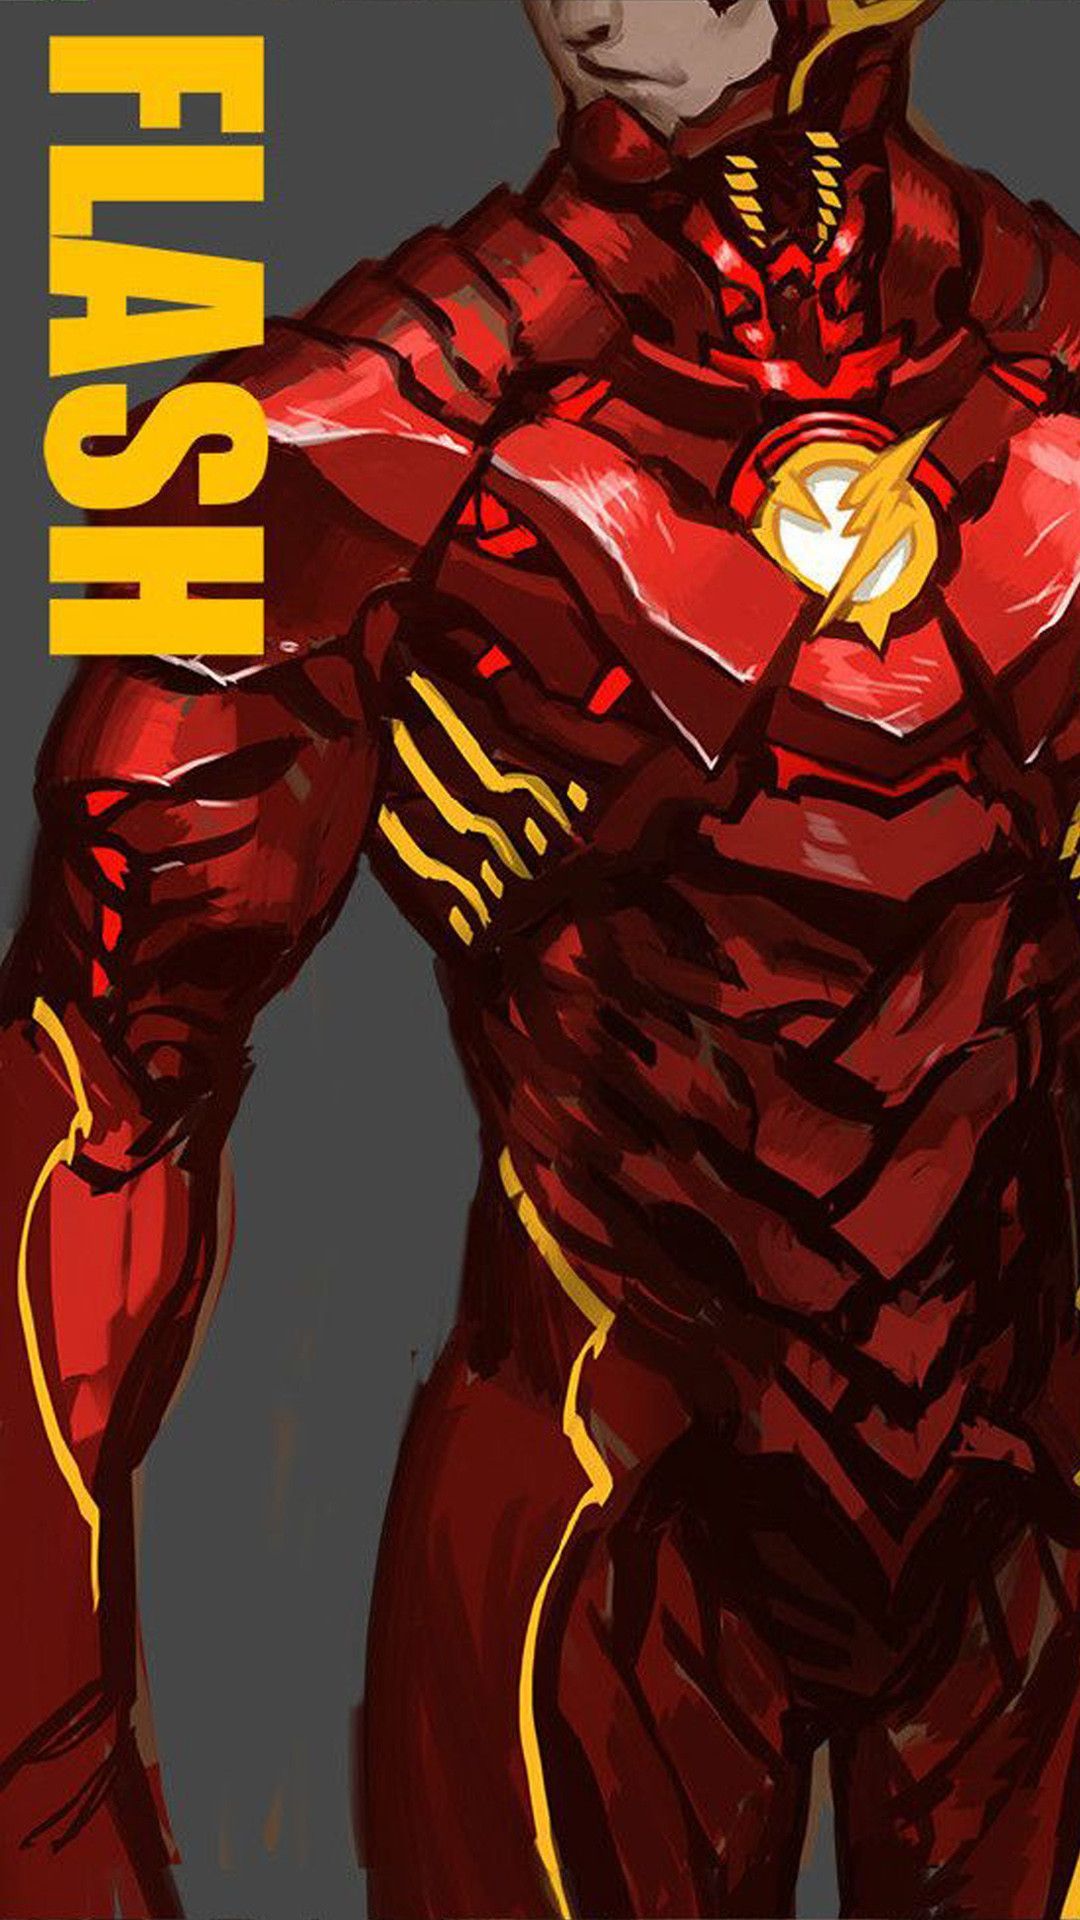 Justice League Flash Wallpaper Download. Flash wallpaper, Justice league flash, Justice league